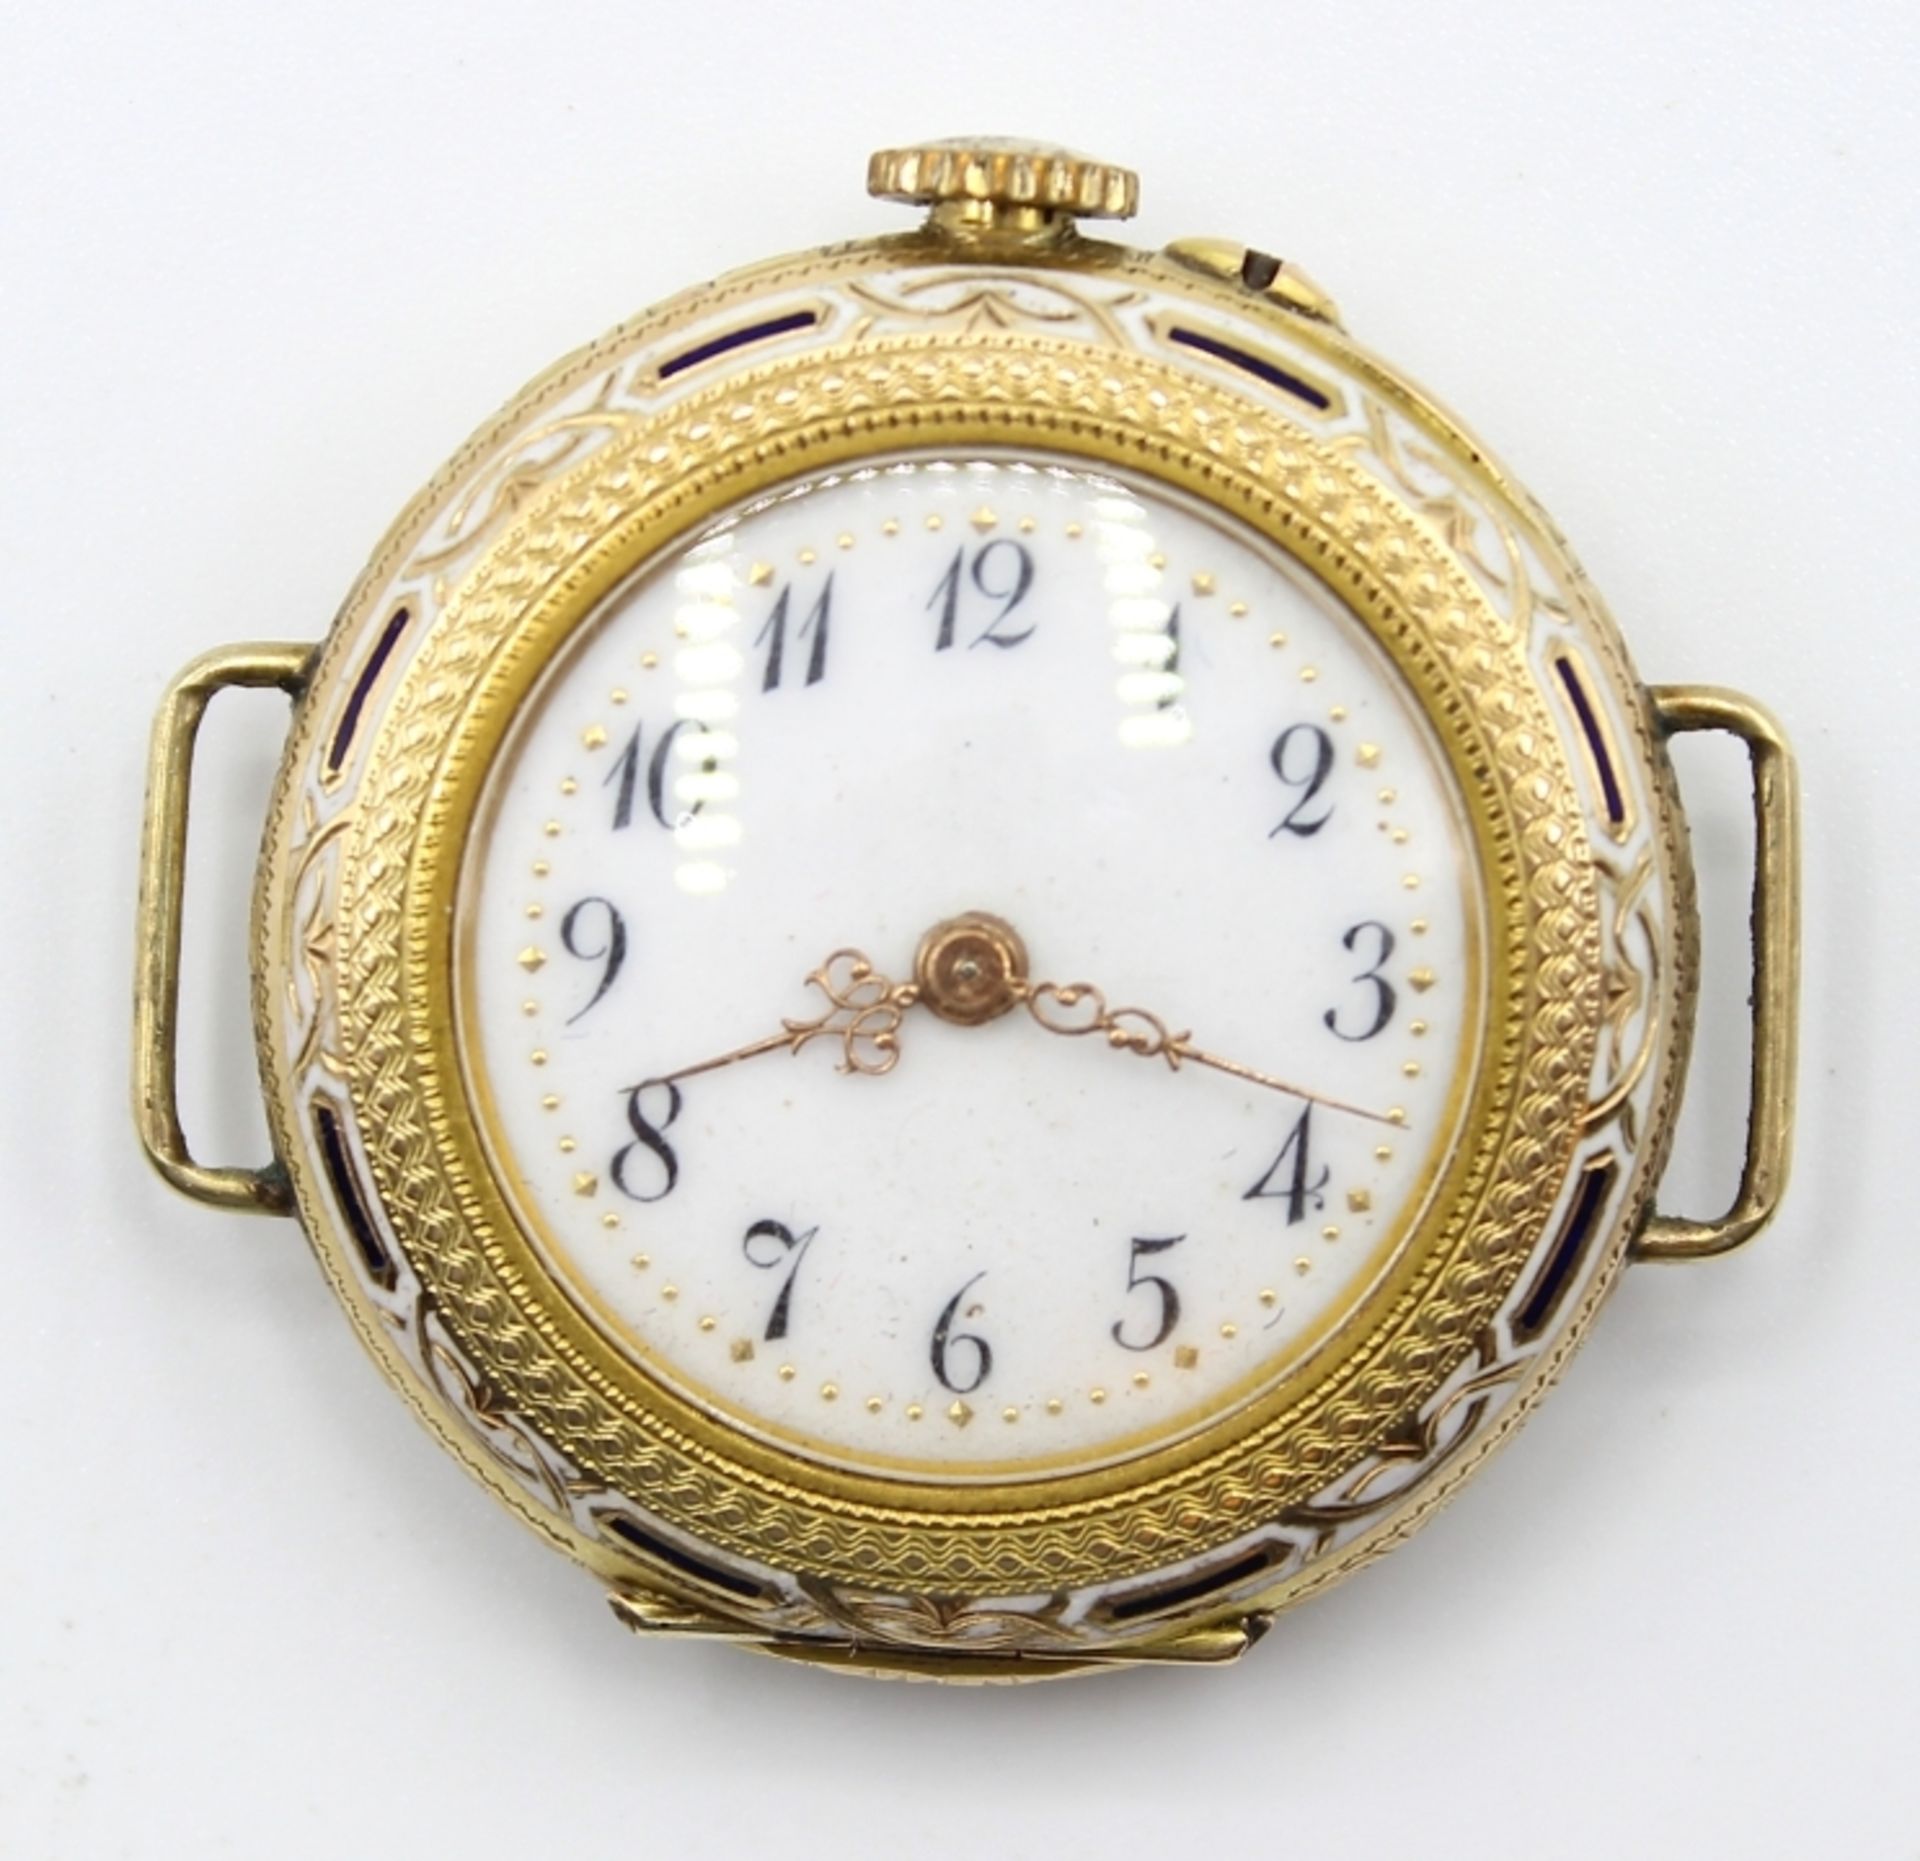 Goldene Armbanduhr - Remontoir um 1920/30 No. 23113, Staubdeckel mit Monogramm AG,